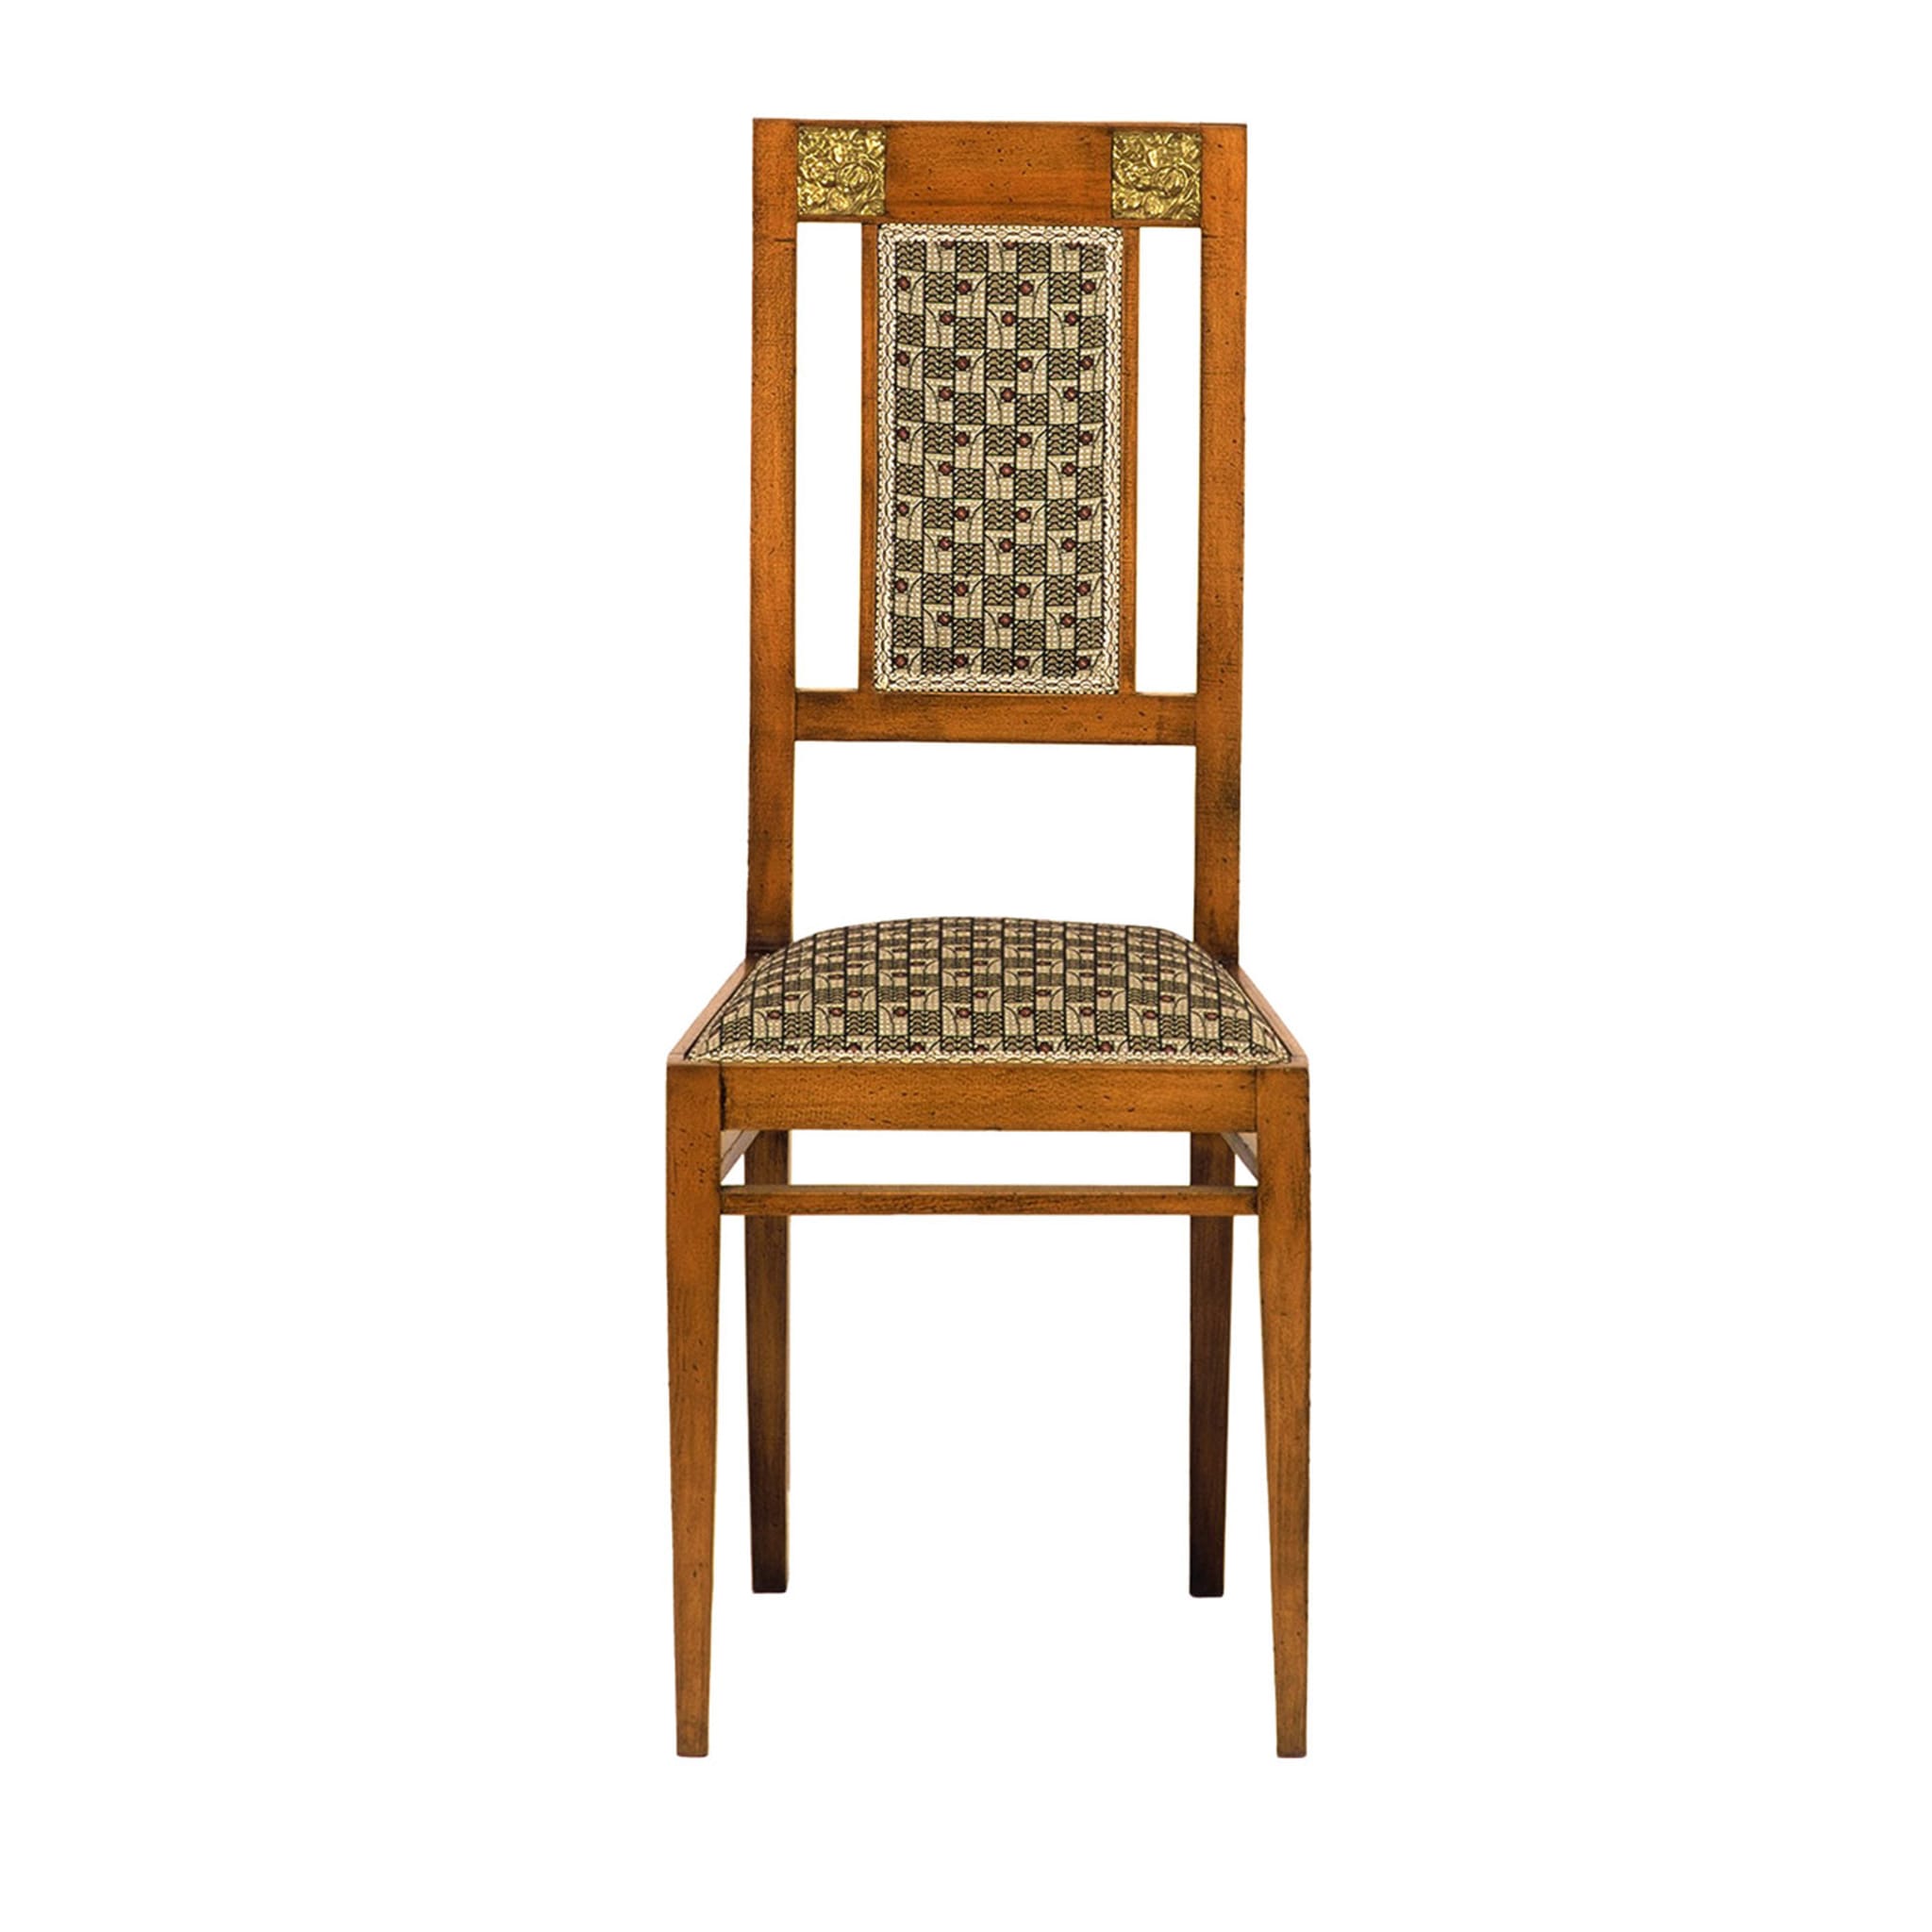 Italian Art Nouveau-Style Beech Chair - Main view